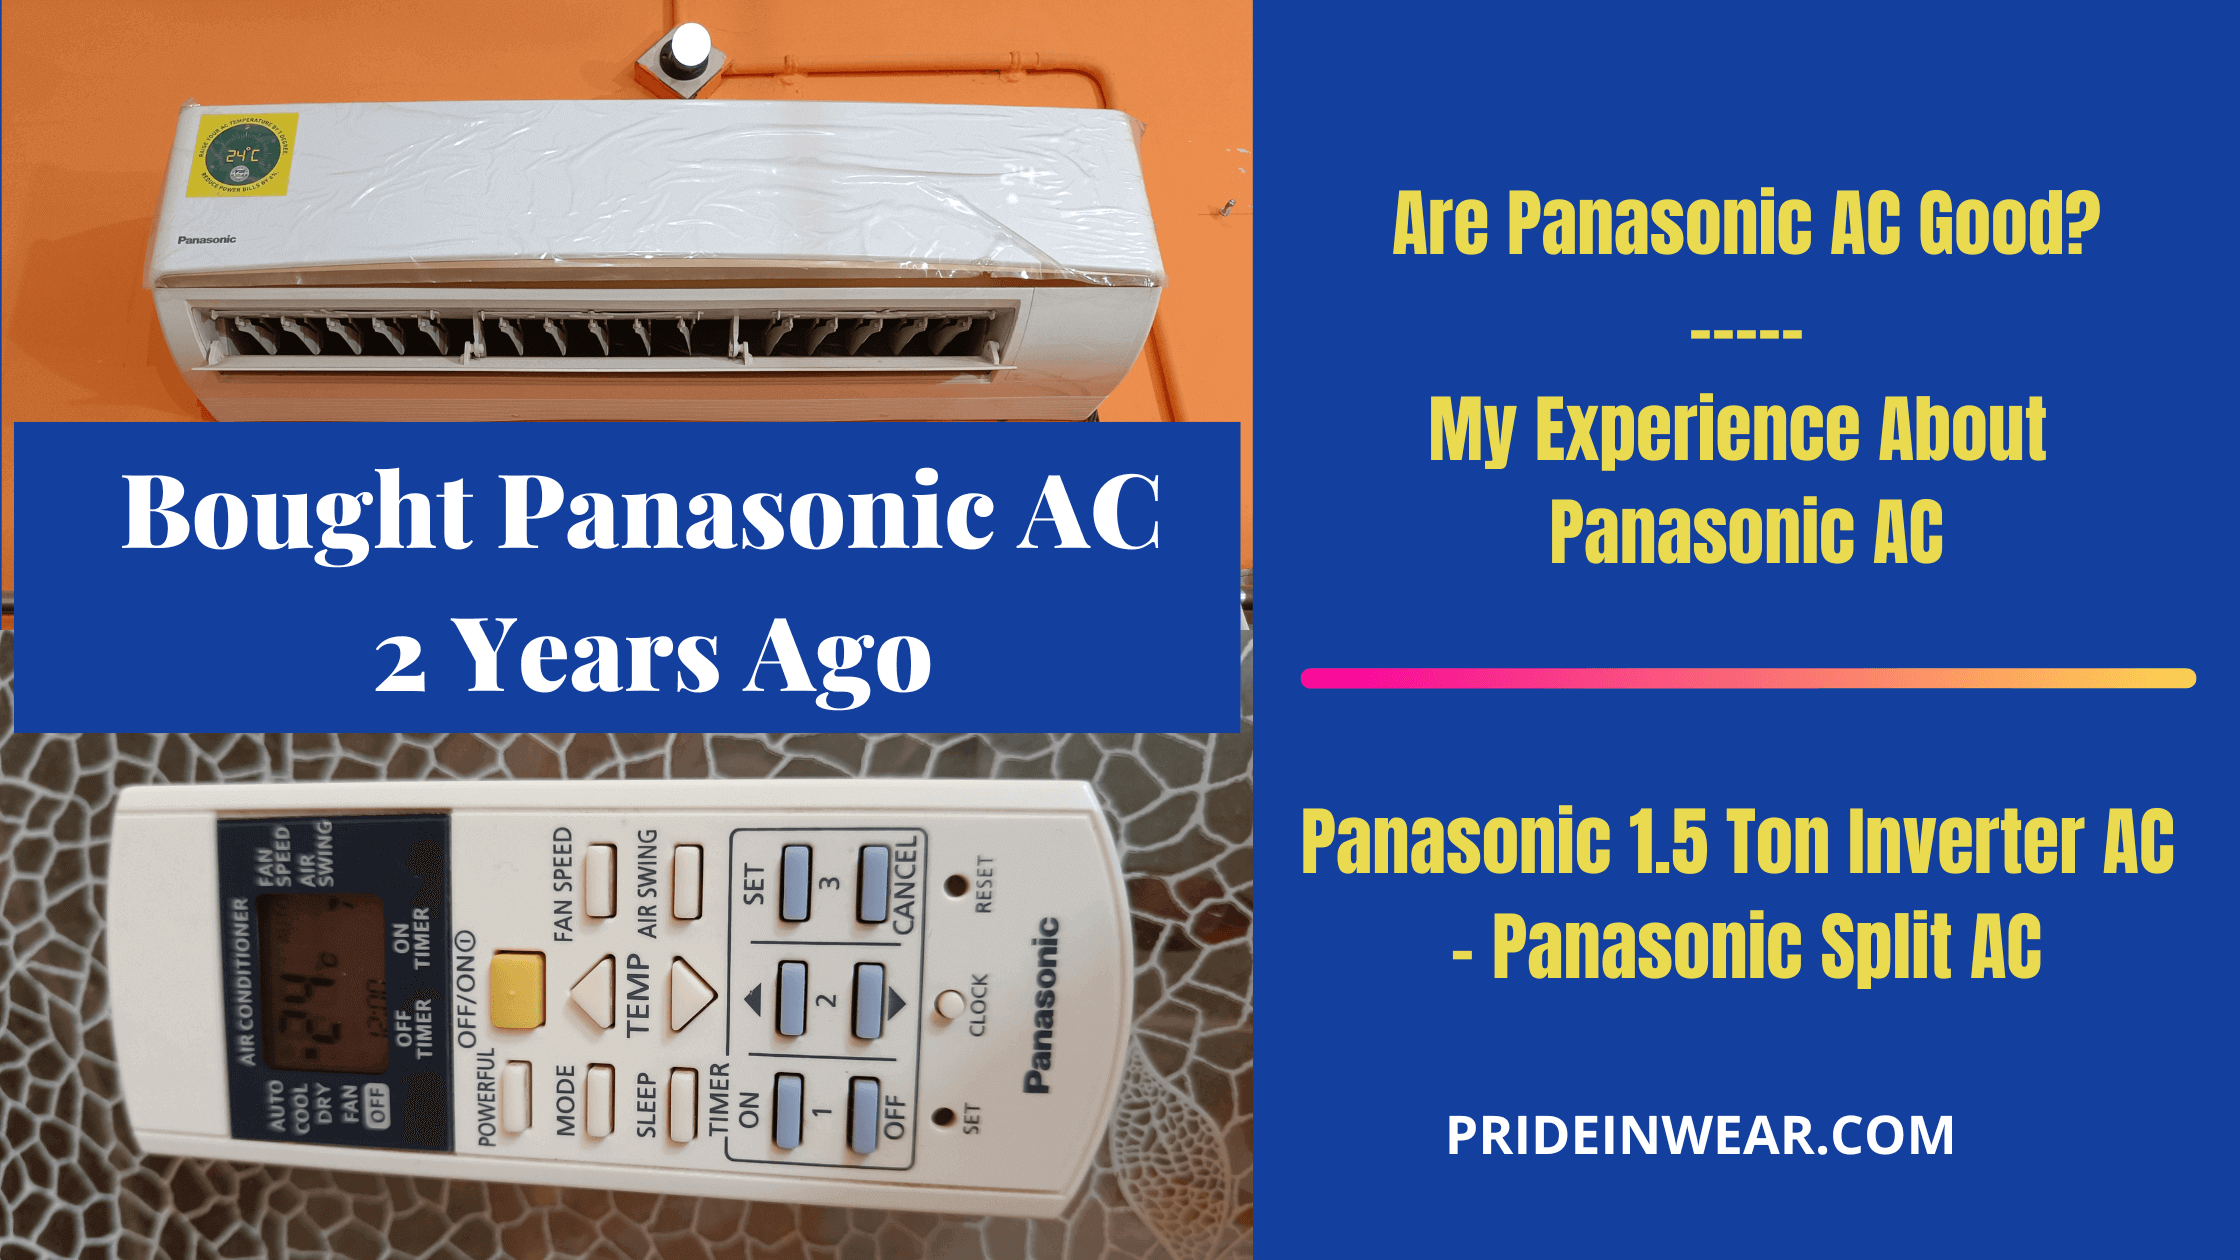 Are Panasonic AC Good?